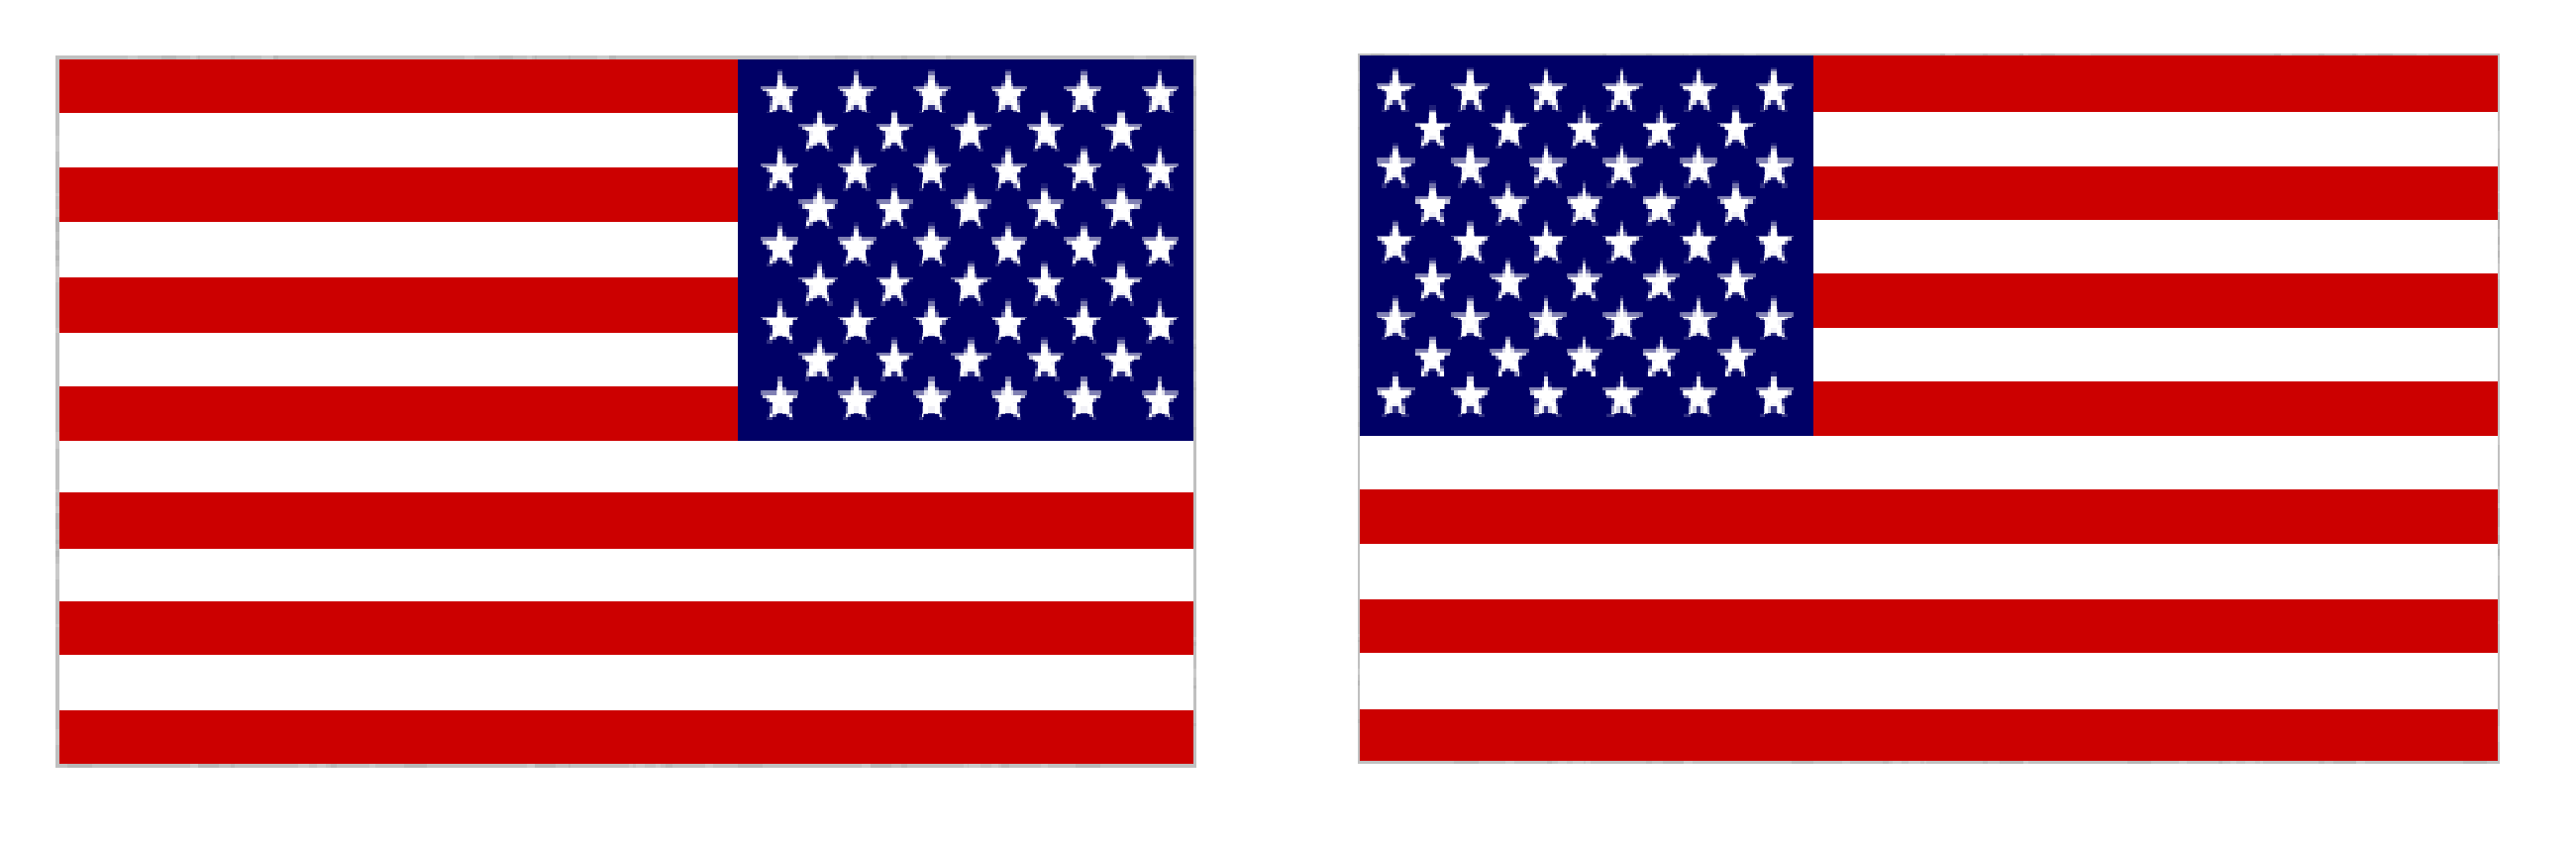 American Flag Clip Art.